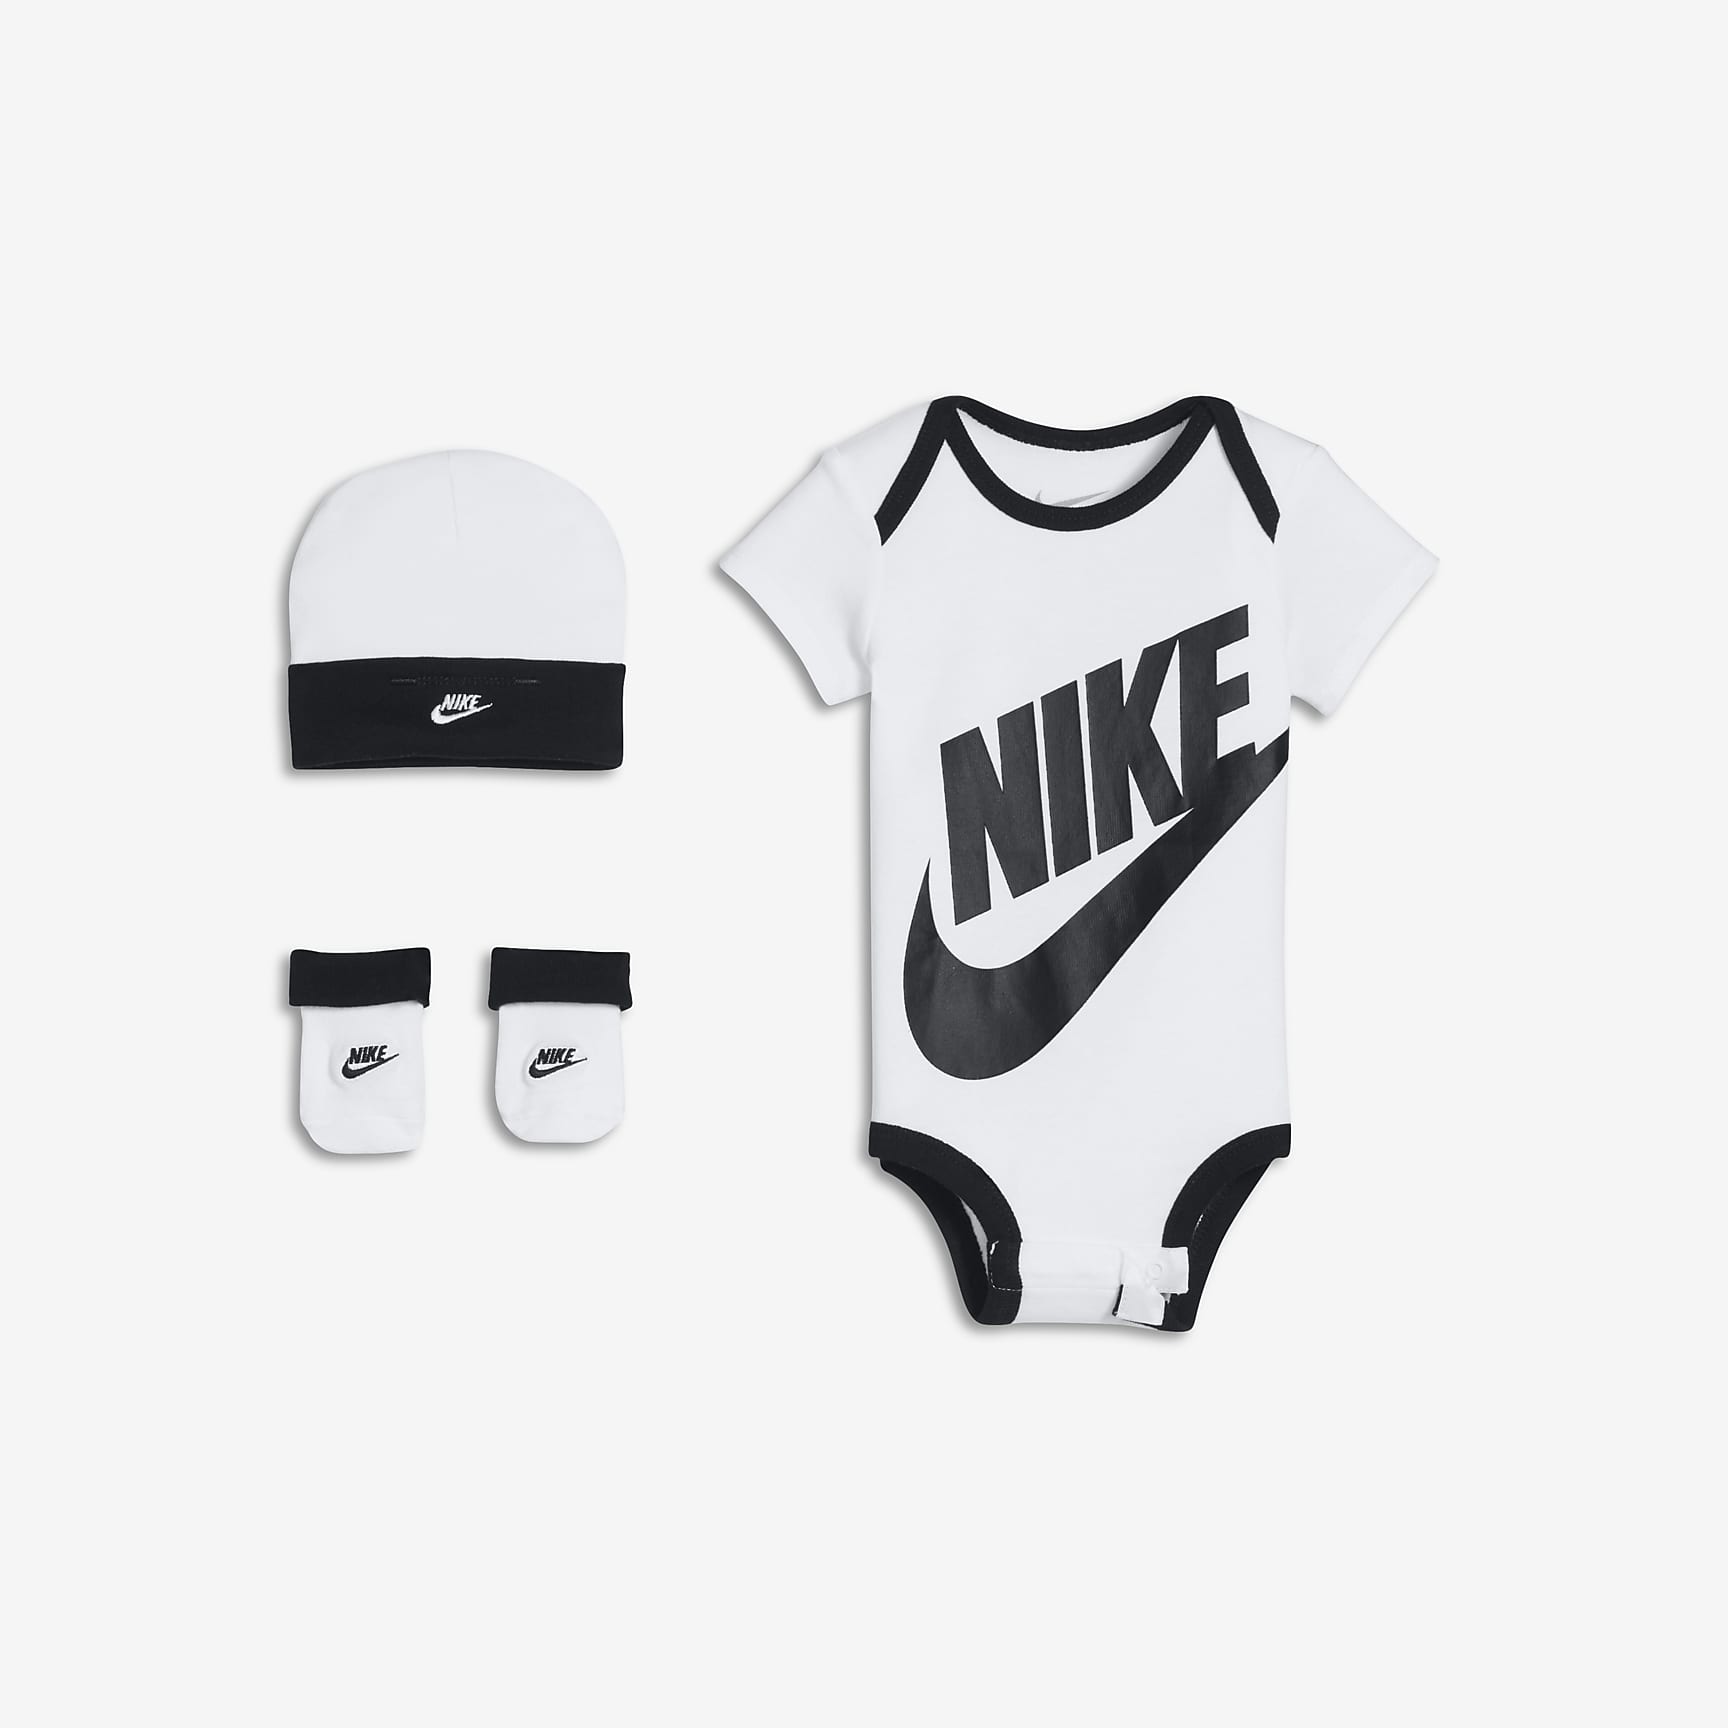 Nike coffret bébé Futura white black